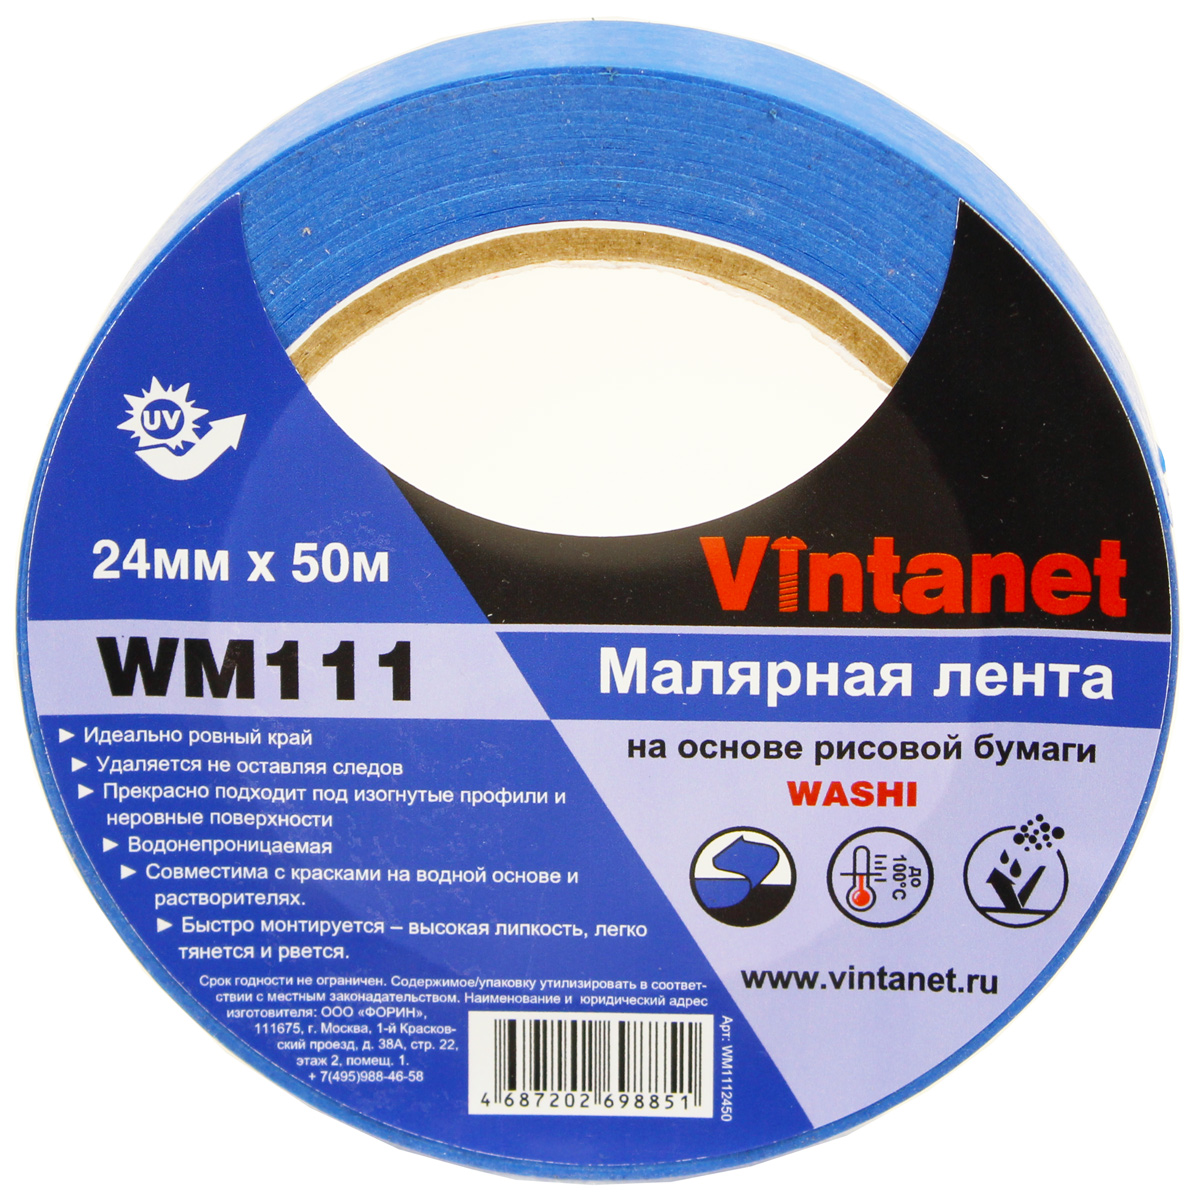 Лента малярная на основе рисовой бумаги Washi, Vintanet WM111, 24мм х 50м, WM1112450 клейкие washi ленты для декора